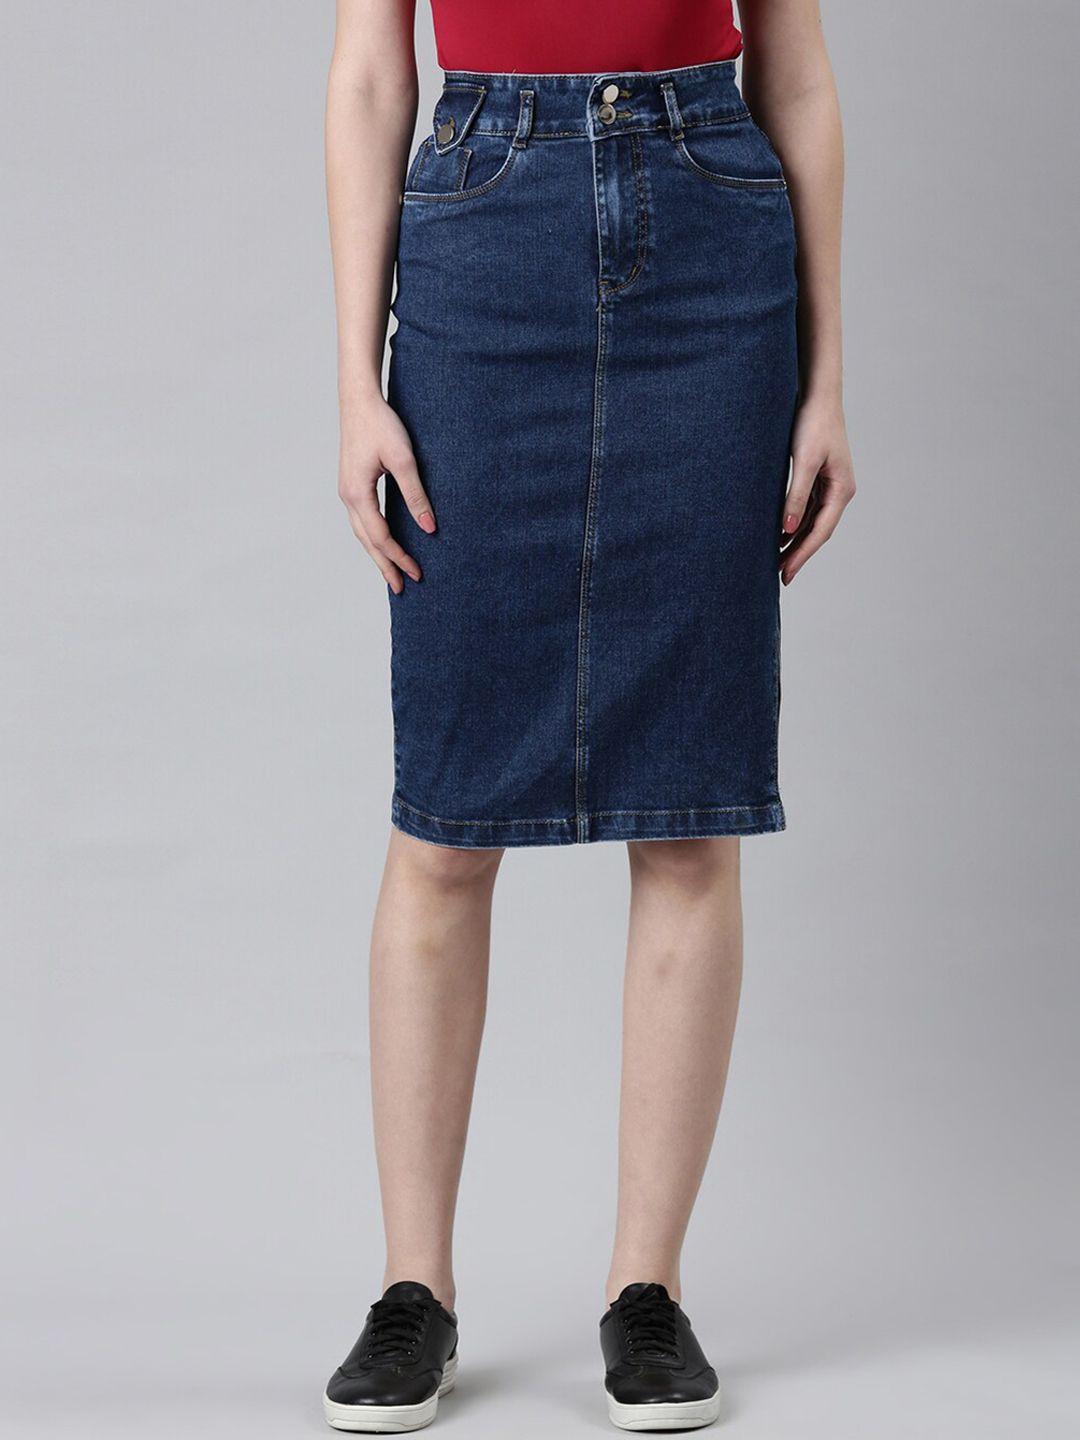 showoff denim knee-length pencil skirt